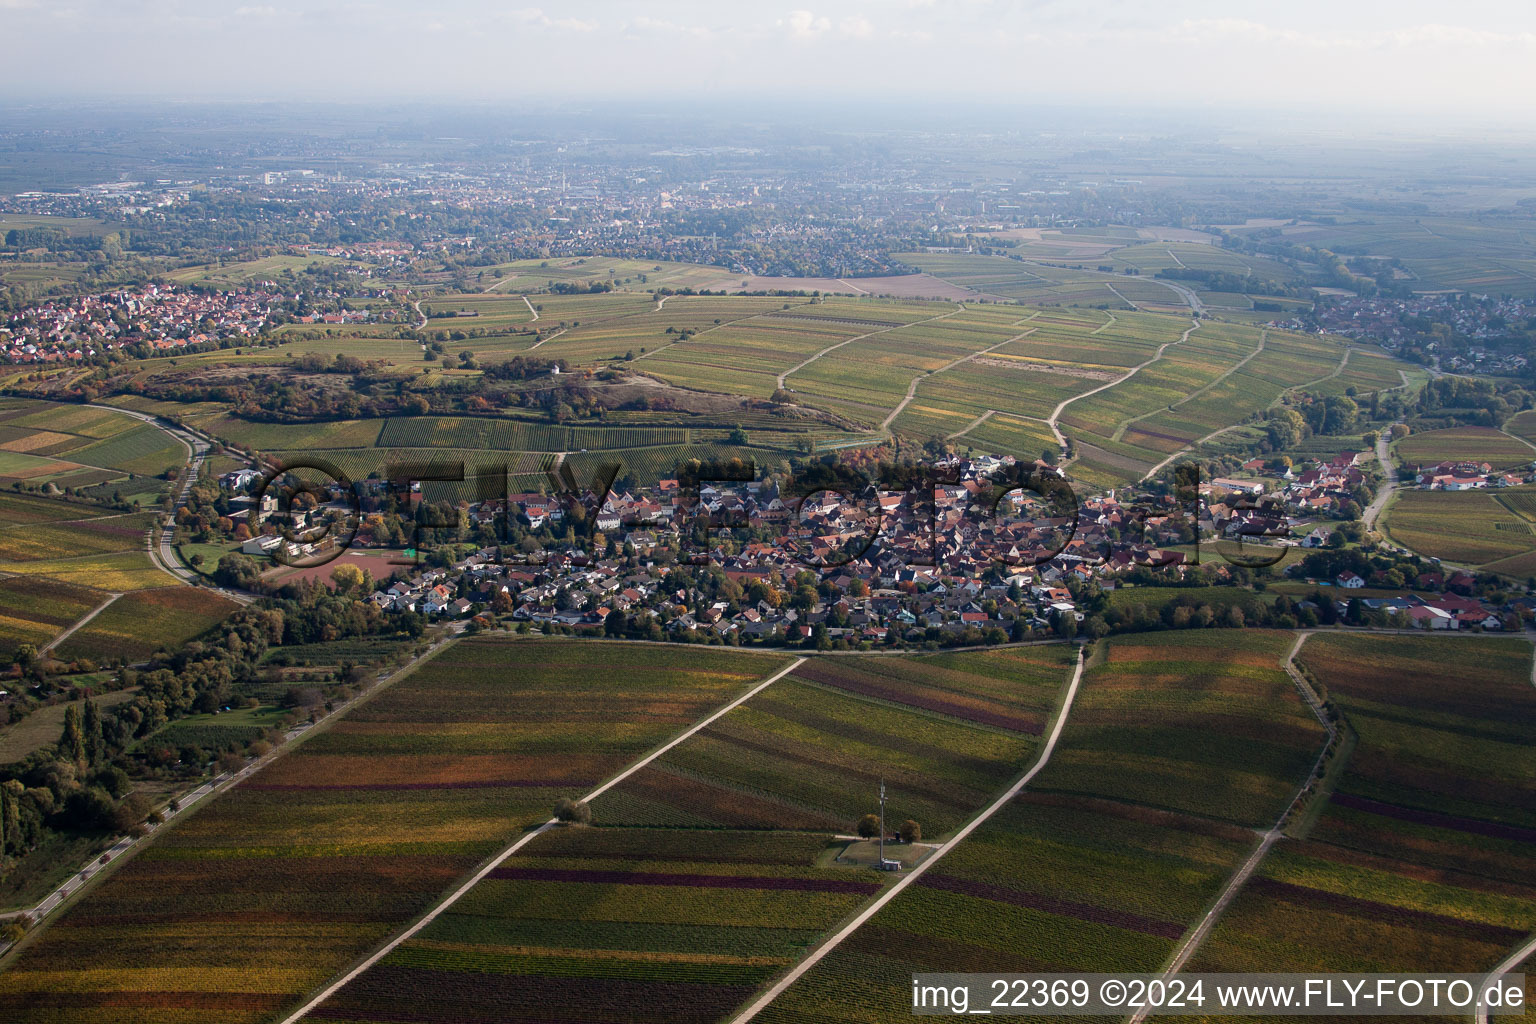 Ilbesheim bei Landau in der Pfalz in the state Rhineland-Palatinate, Germany seen from a drone